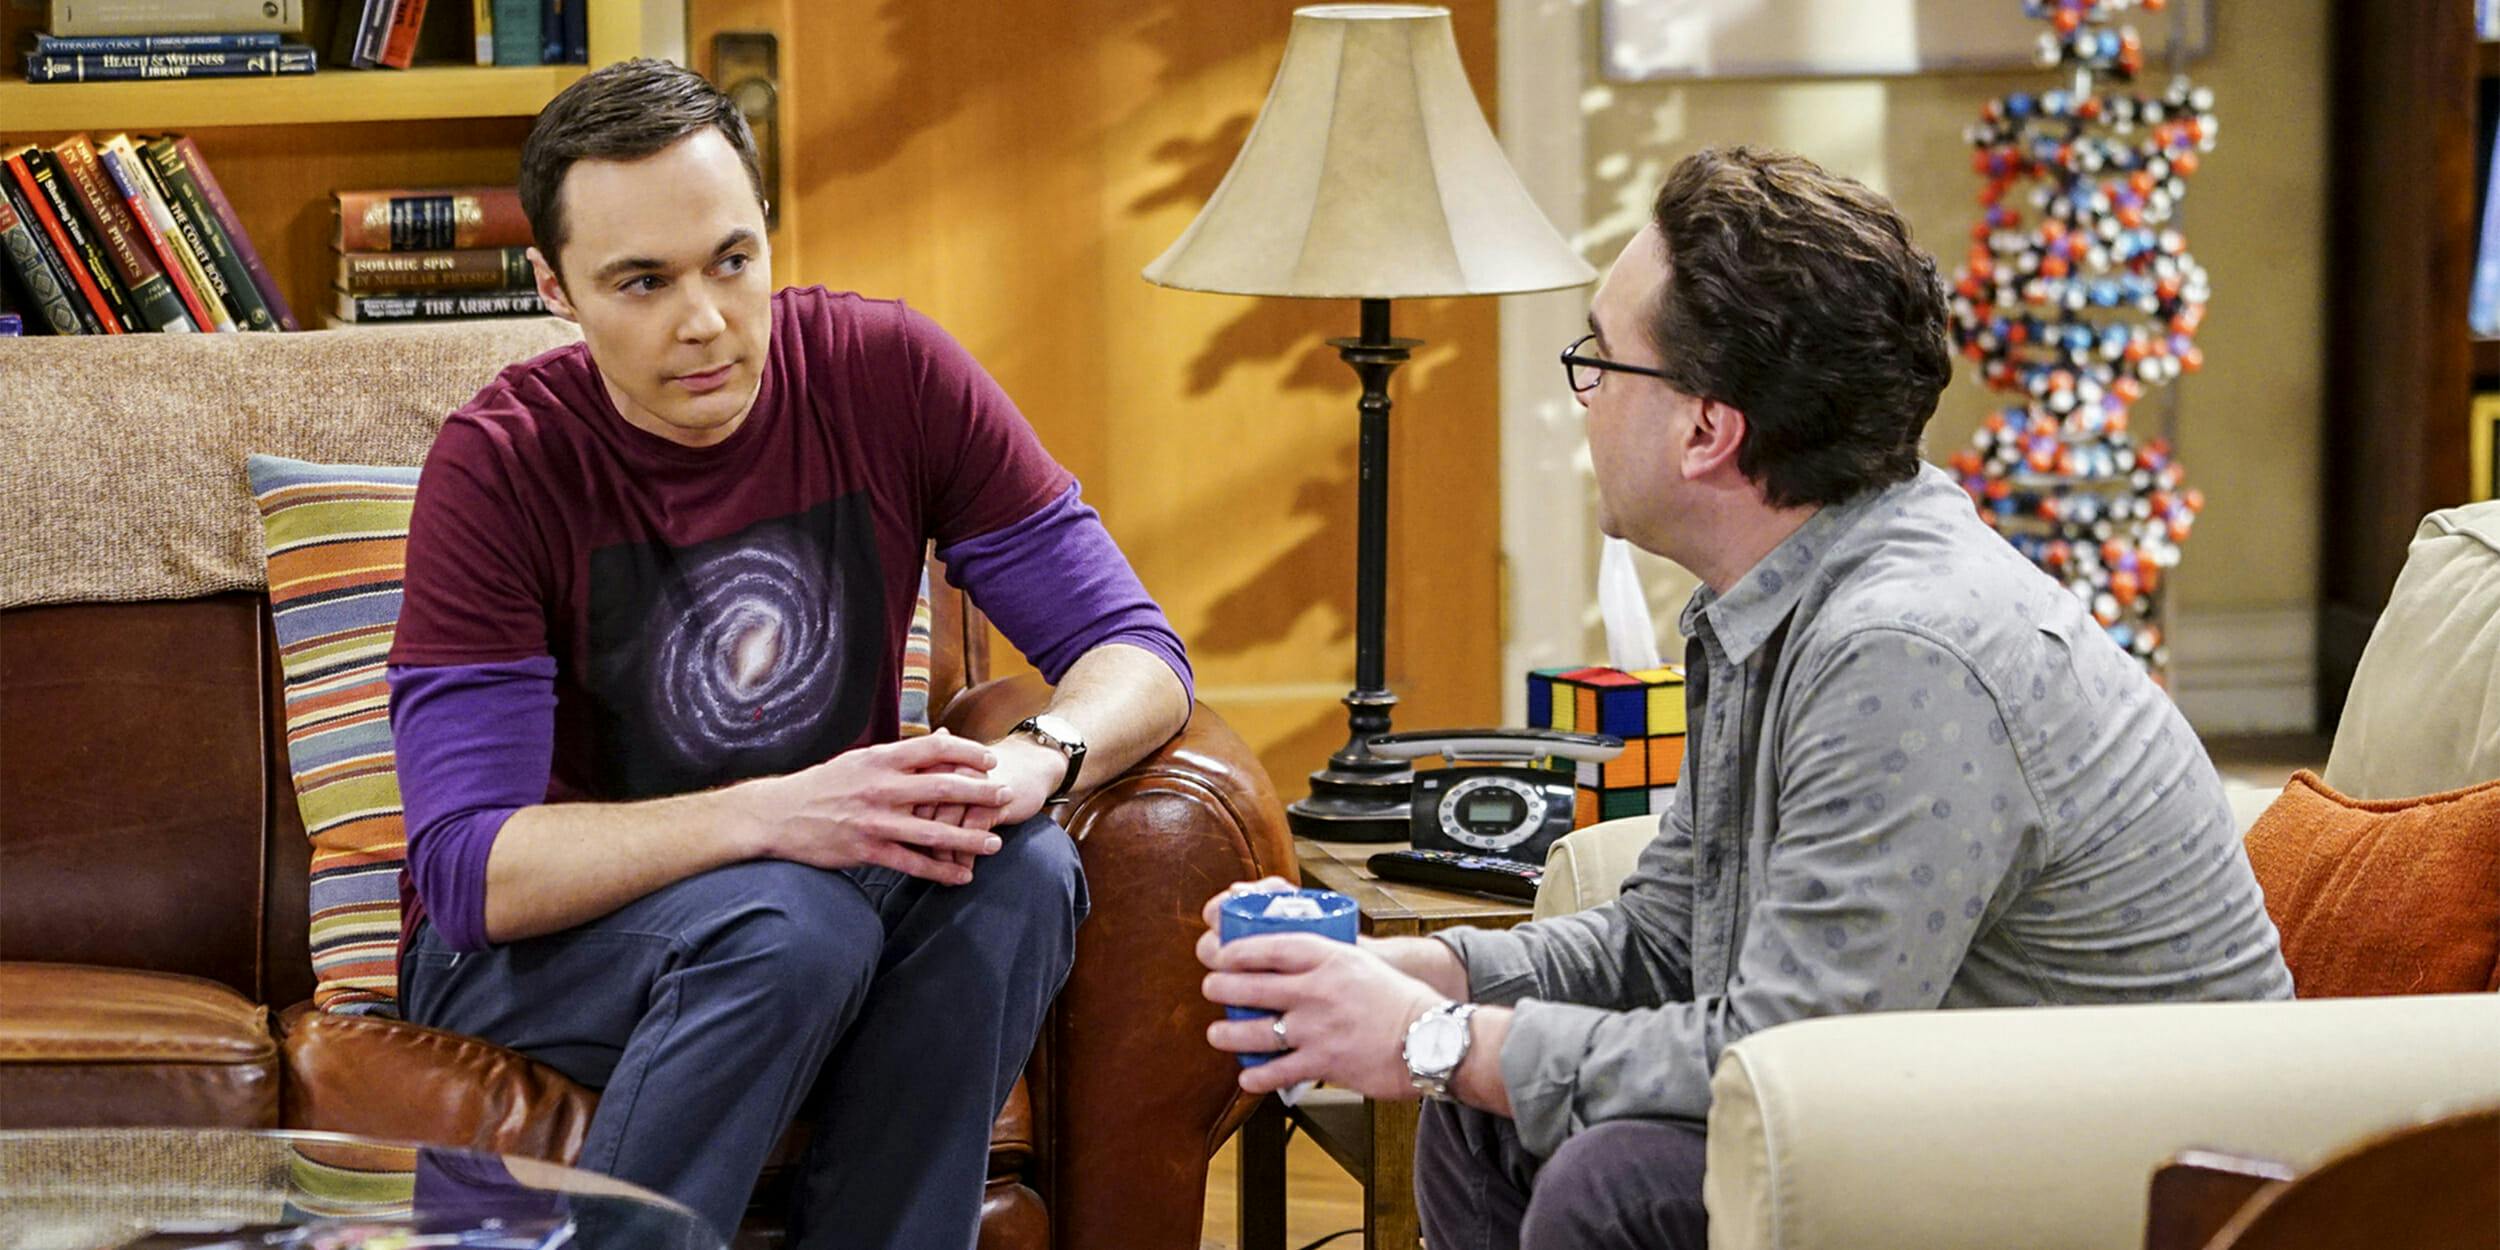 Sheldon and Leonard from the Big Bang Theory bitcoin episode